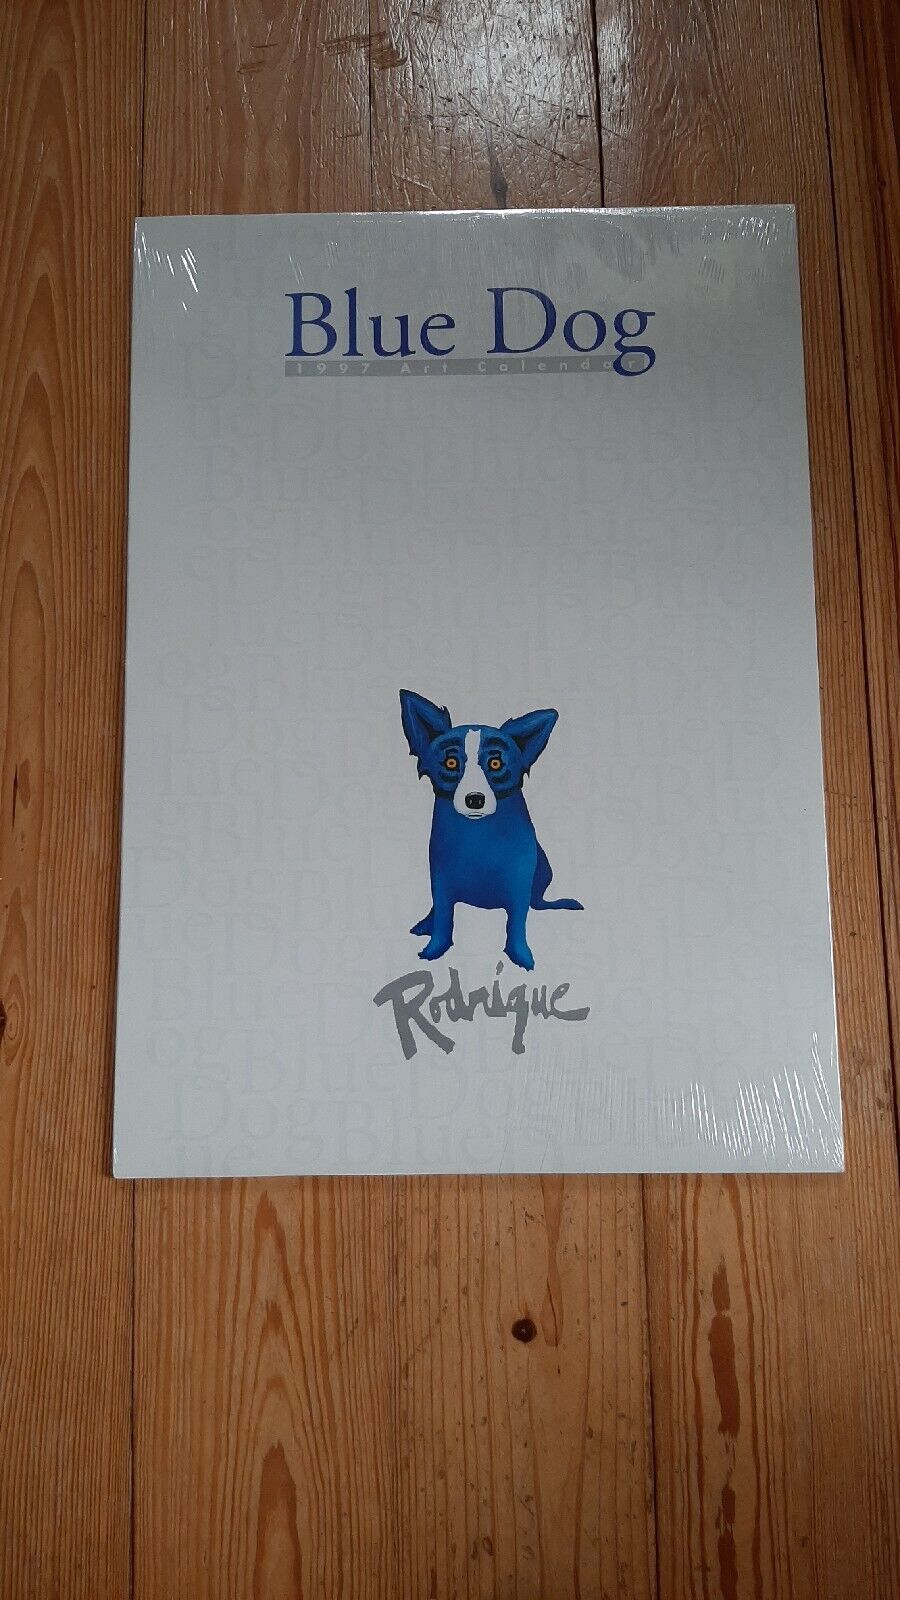 BLUE DOG - NEW IN SEALED ORIGINAL PLASTIC  1997 CALENDAR - GEORGE RODRIGUE, NICE